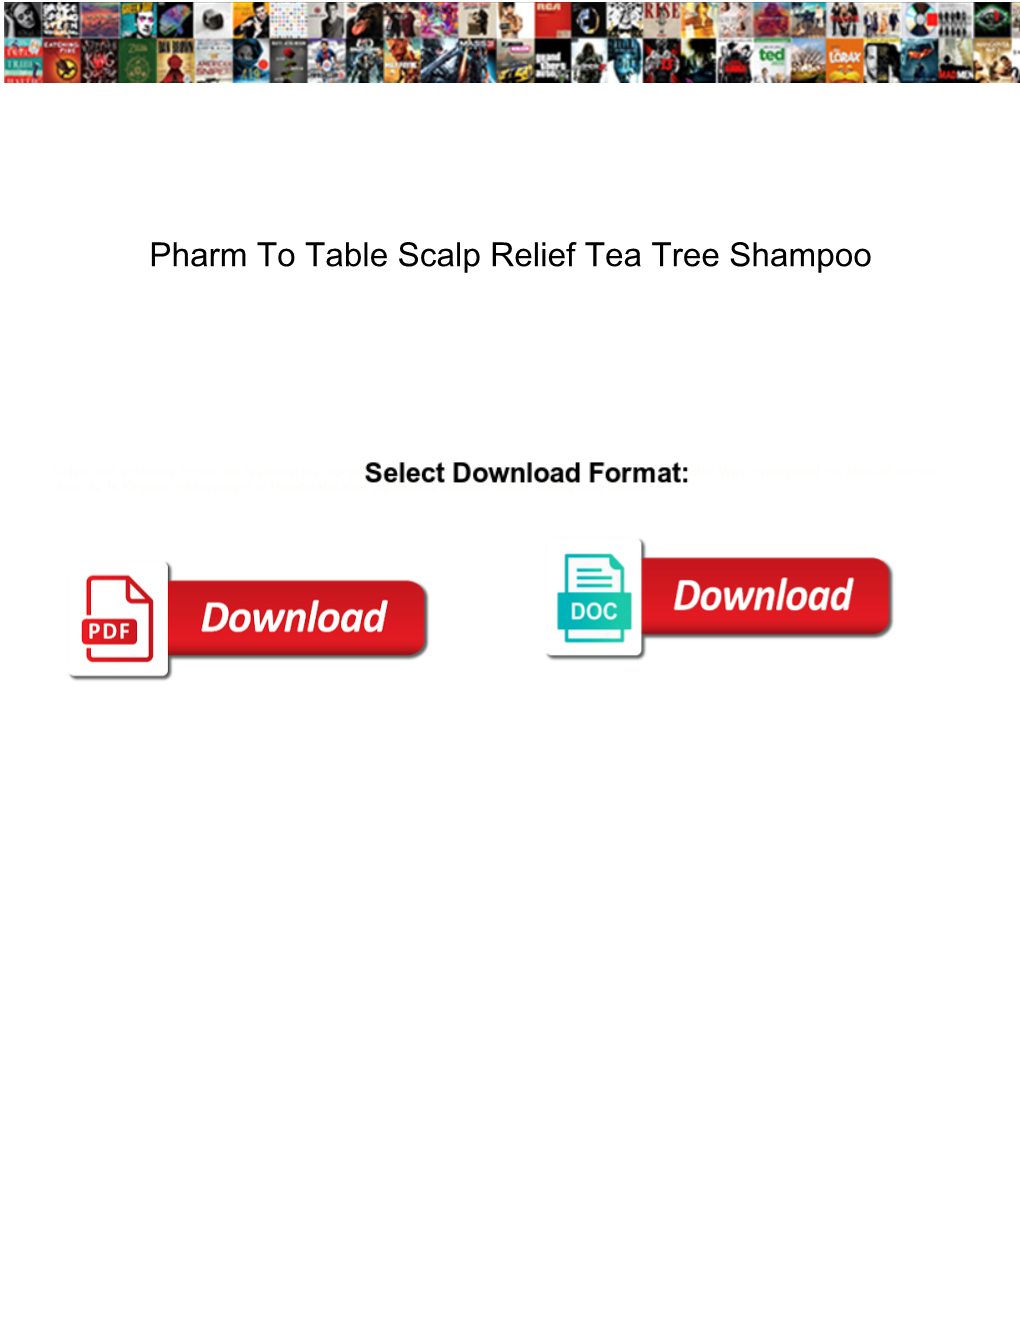 Pharm to Table Scalp Relief Tea Tree Shampoo